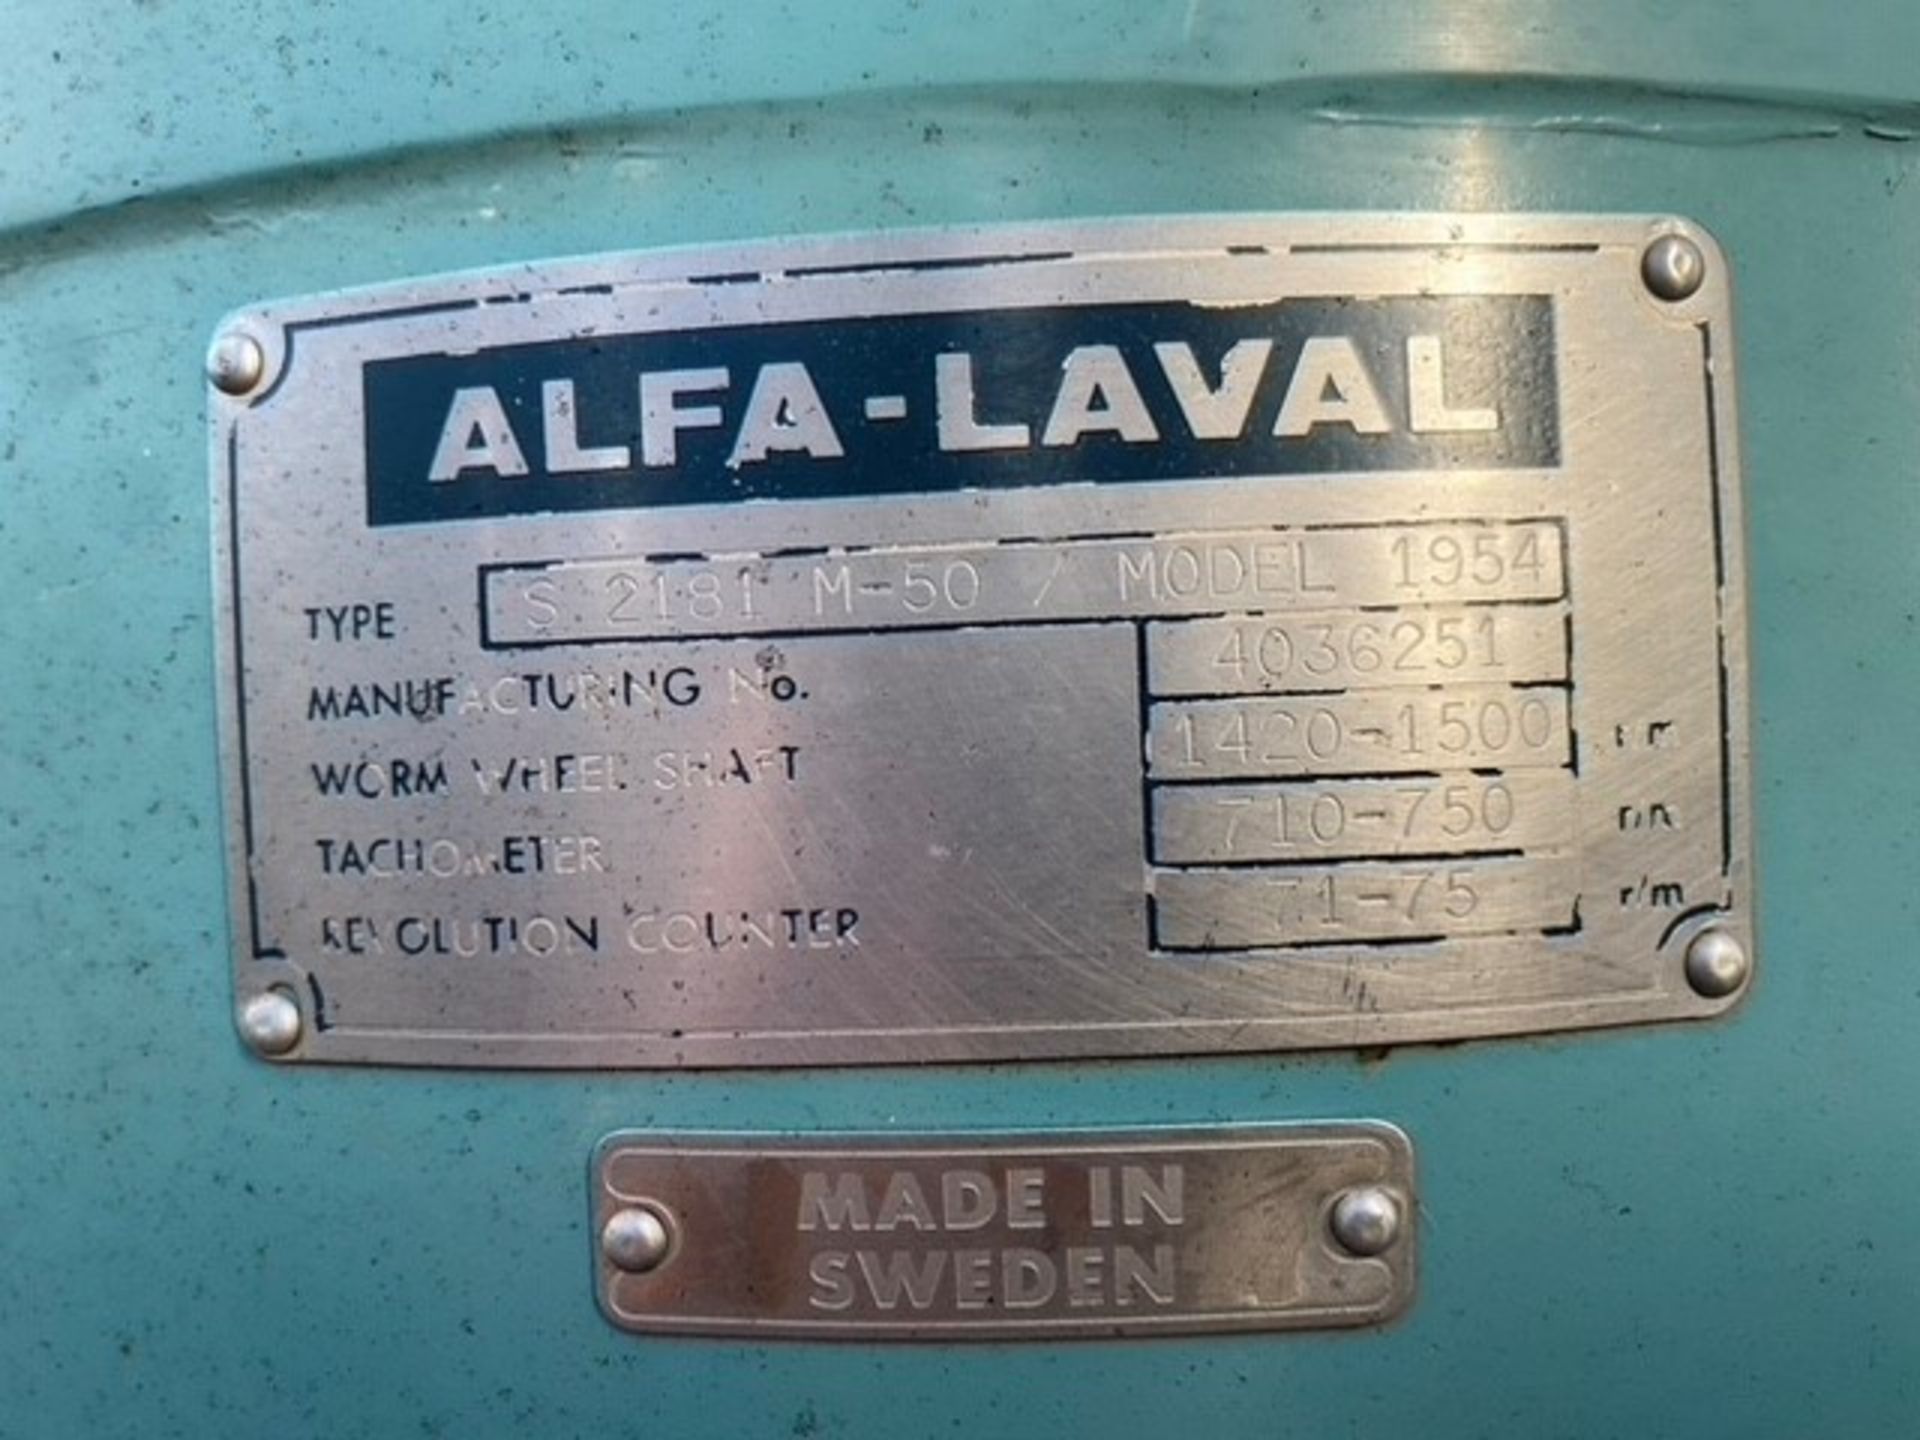 Alfa Laval Milk Separator/Separator, Type S2181M-50, Model 1954,Mfg. #4036251 (Loading Fee $200) ( - Image 5 of 10